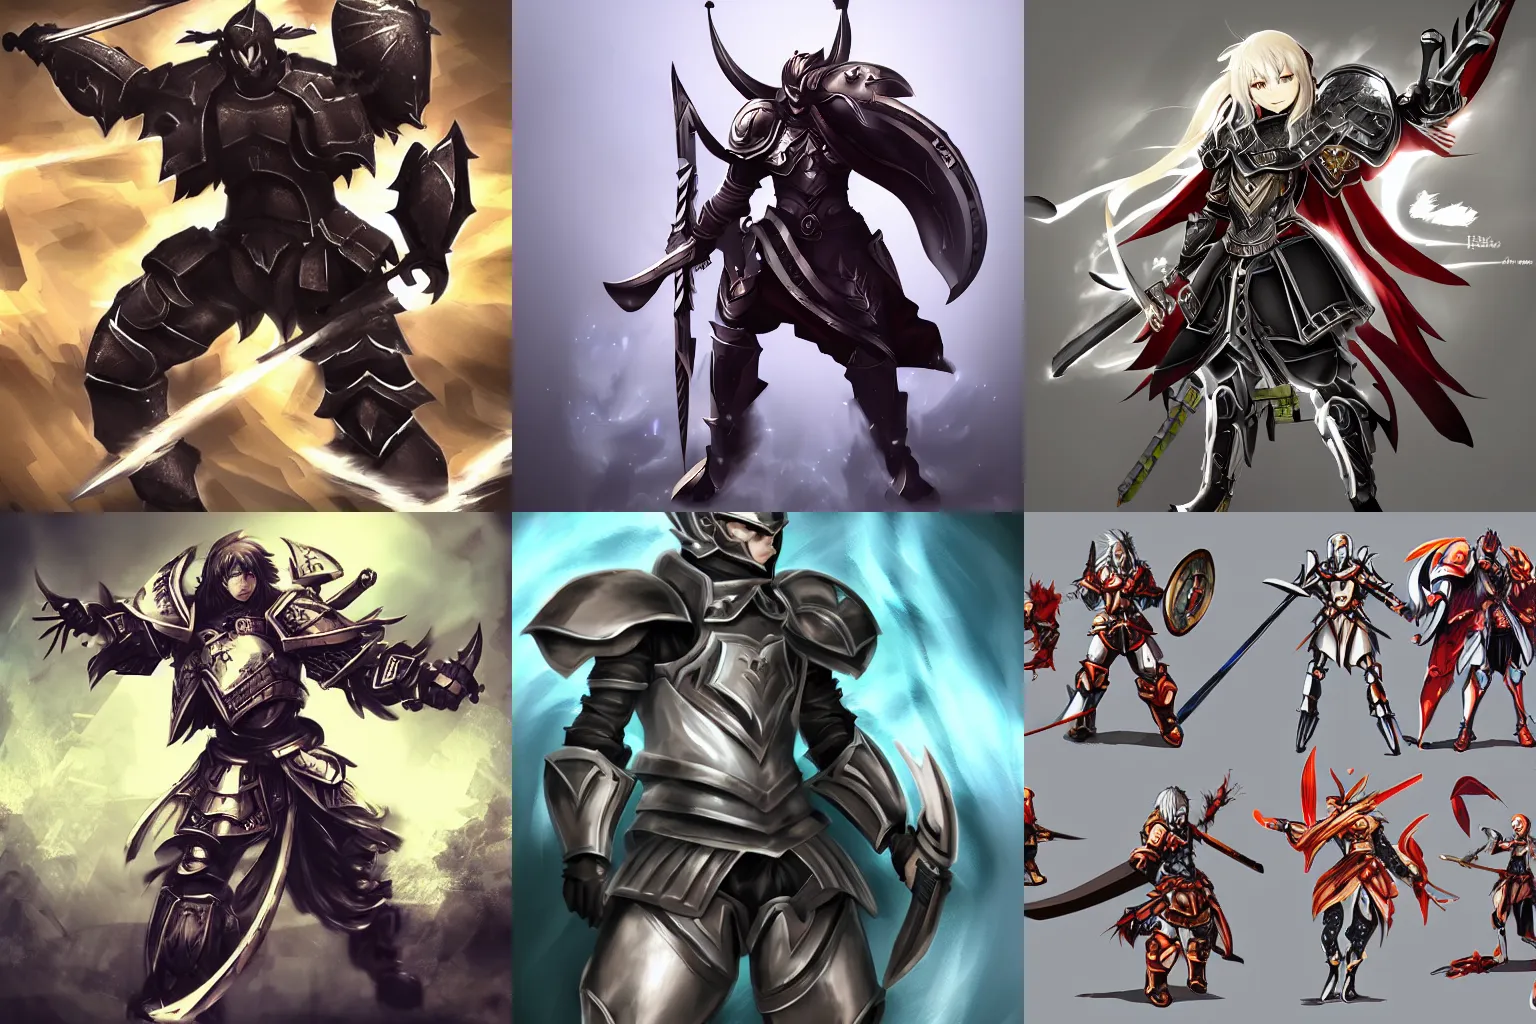 Prompt: anime style warrior, heavy armor, multiple poses, dynamic poses, concept, favorite, trending, digital art,